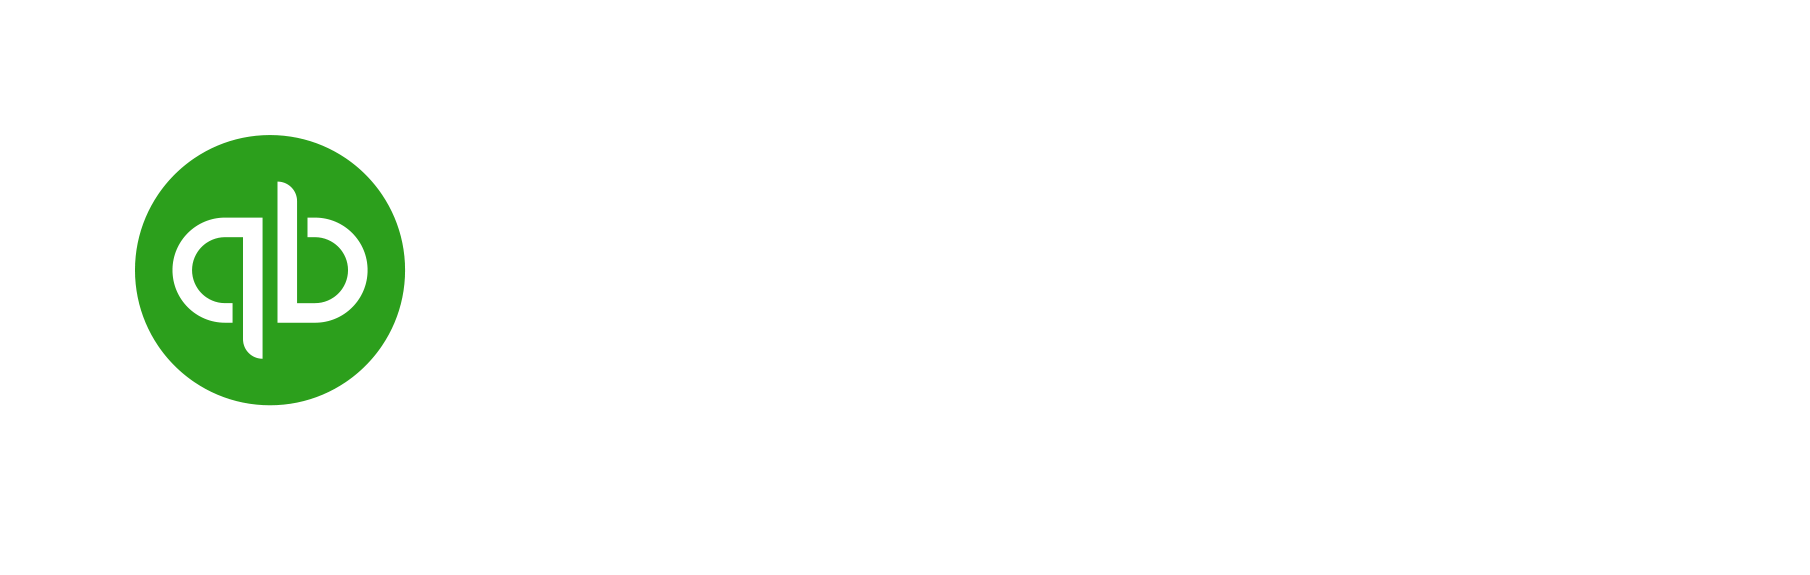 Intuit.com Logo - QuickBooks Learn & Support